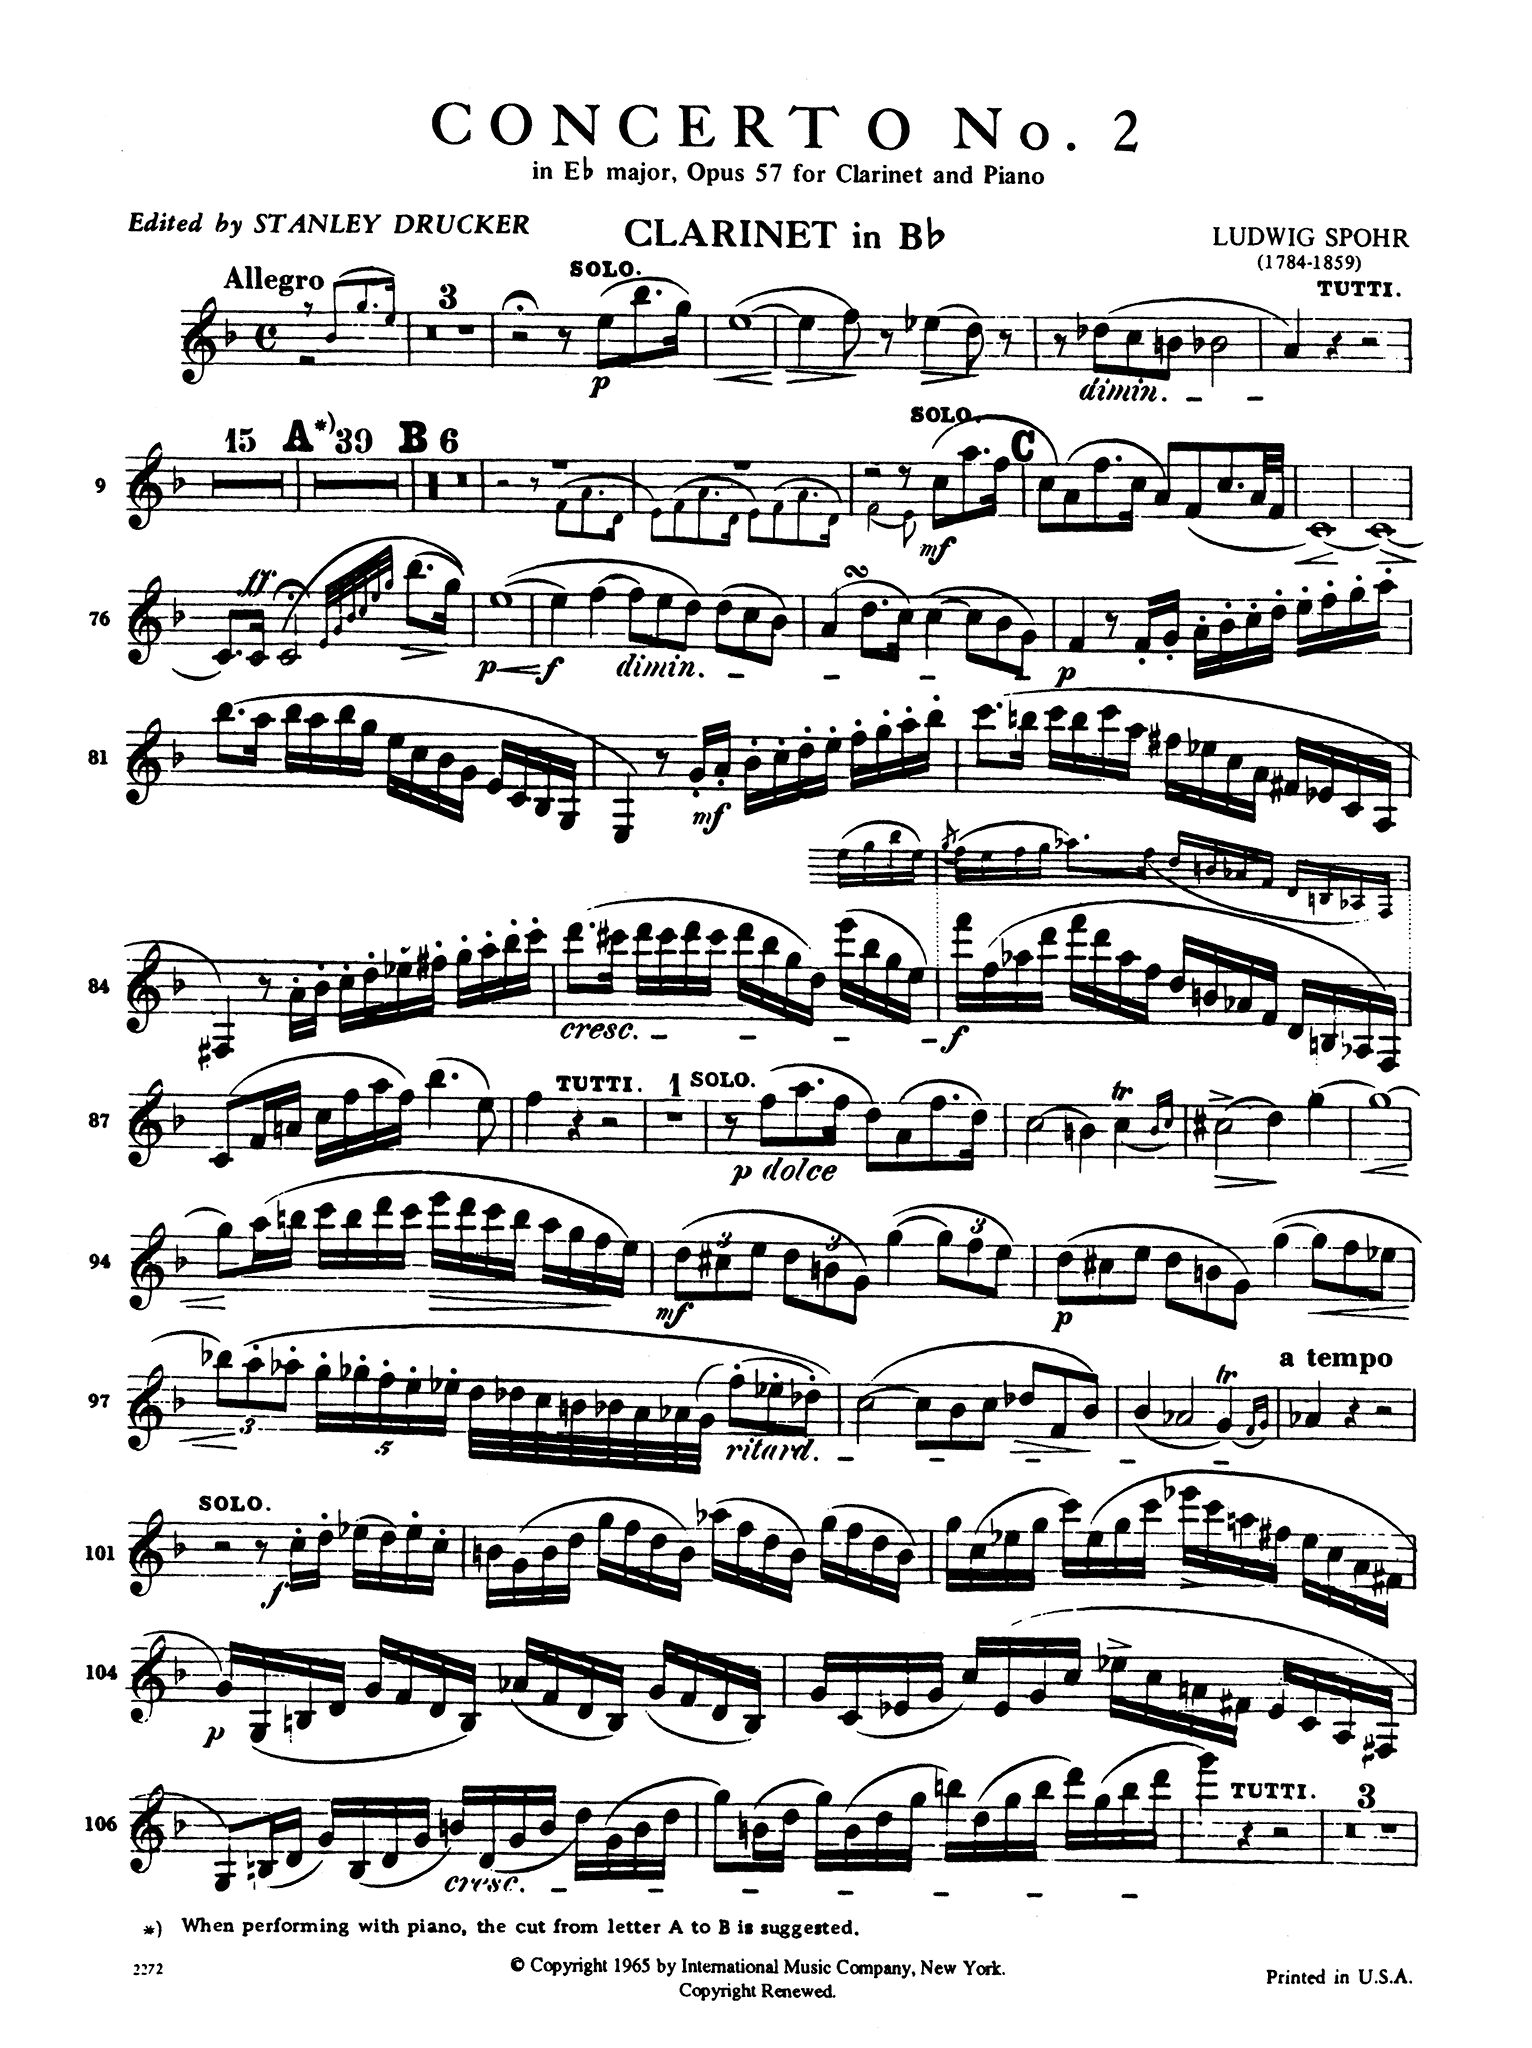 Clarinet Concerto No. 2 in E-flat Major, Op. 57 Clarinet part